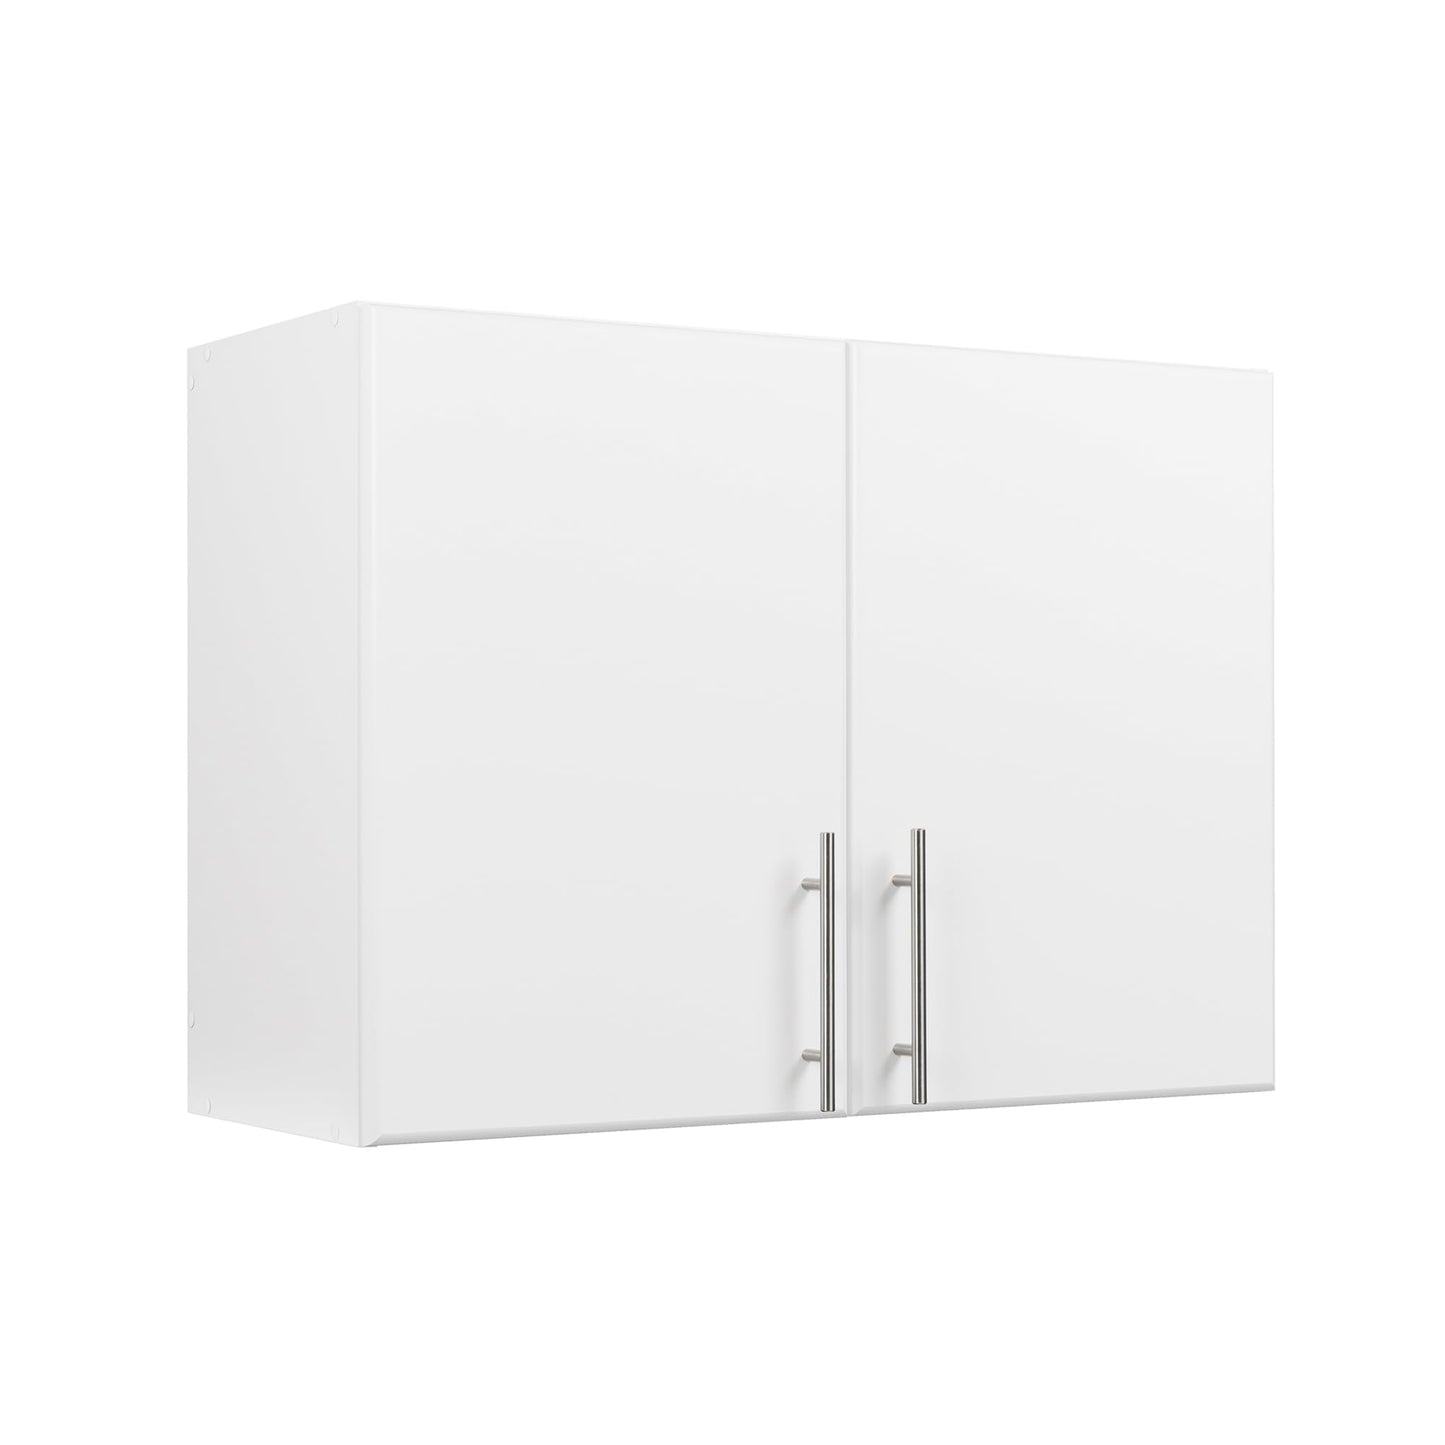 Prepac White Cabinet: Elite Wall Cabinet, WEW-3224 Garage Cabinet with Storage Shelf, Stackable 16"D x 32"W x 24"H, Perfect as a Garage Storage